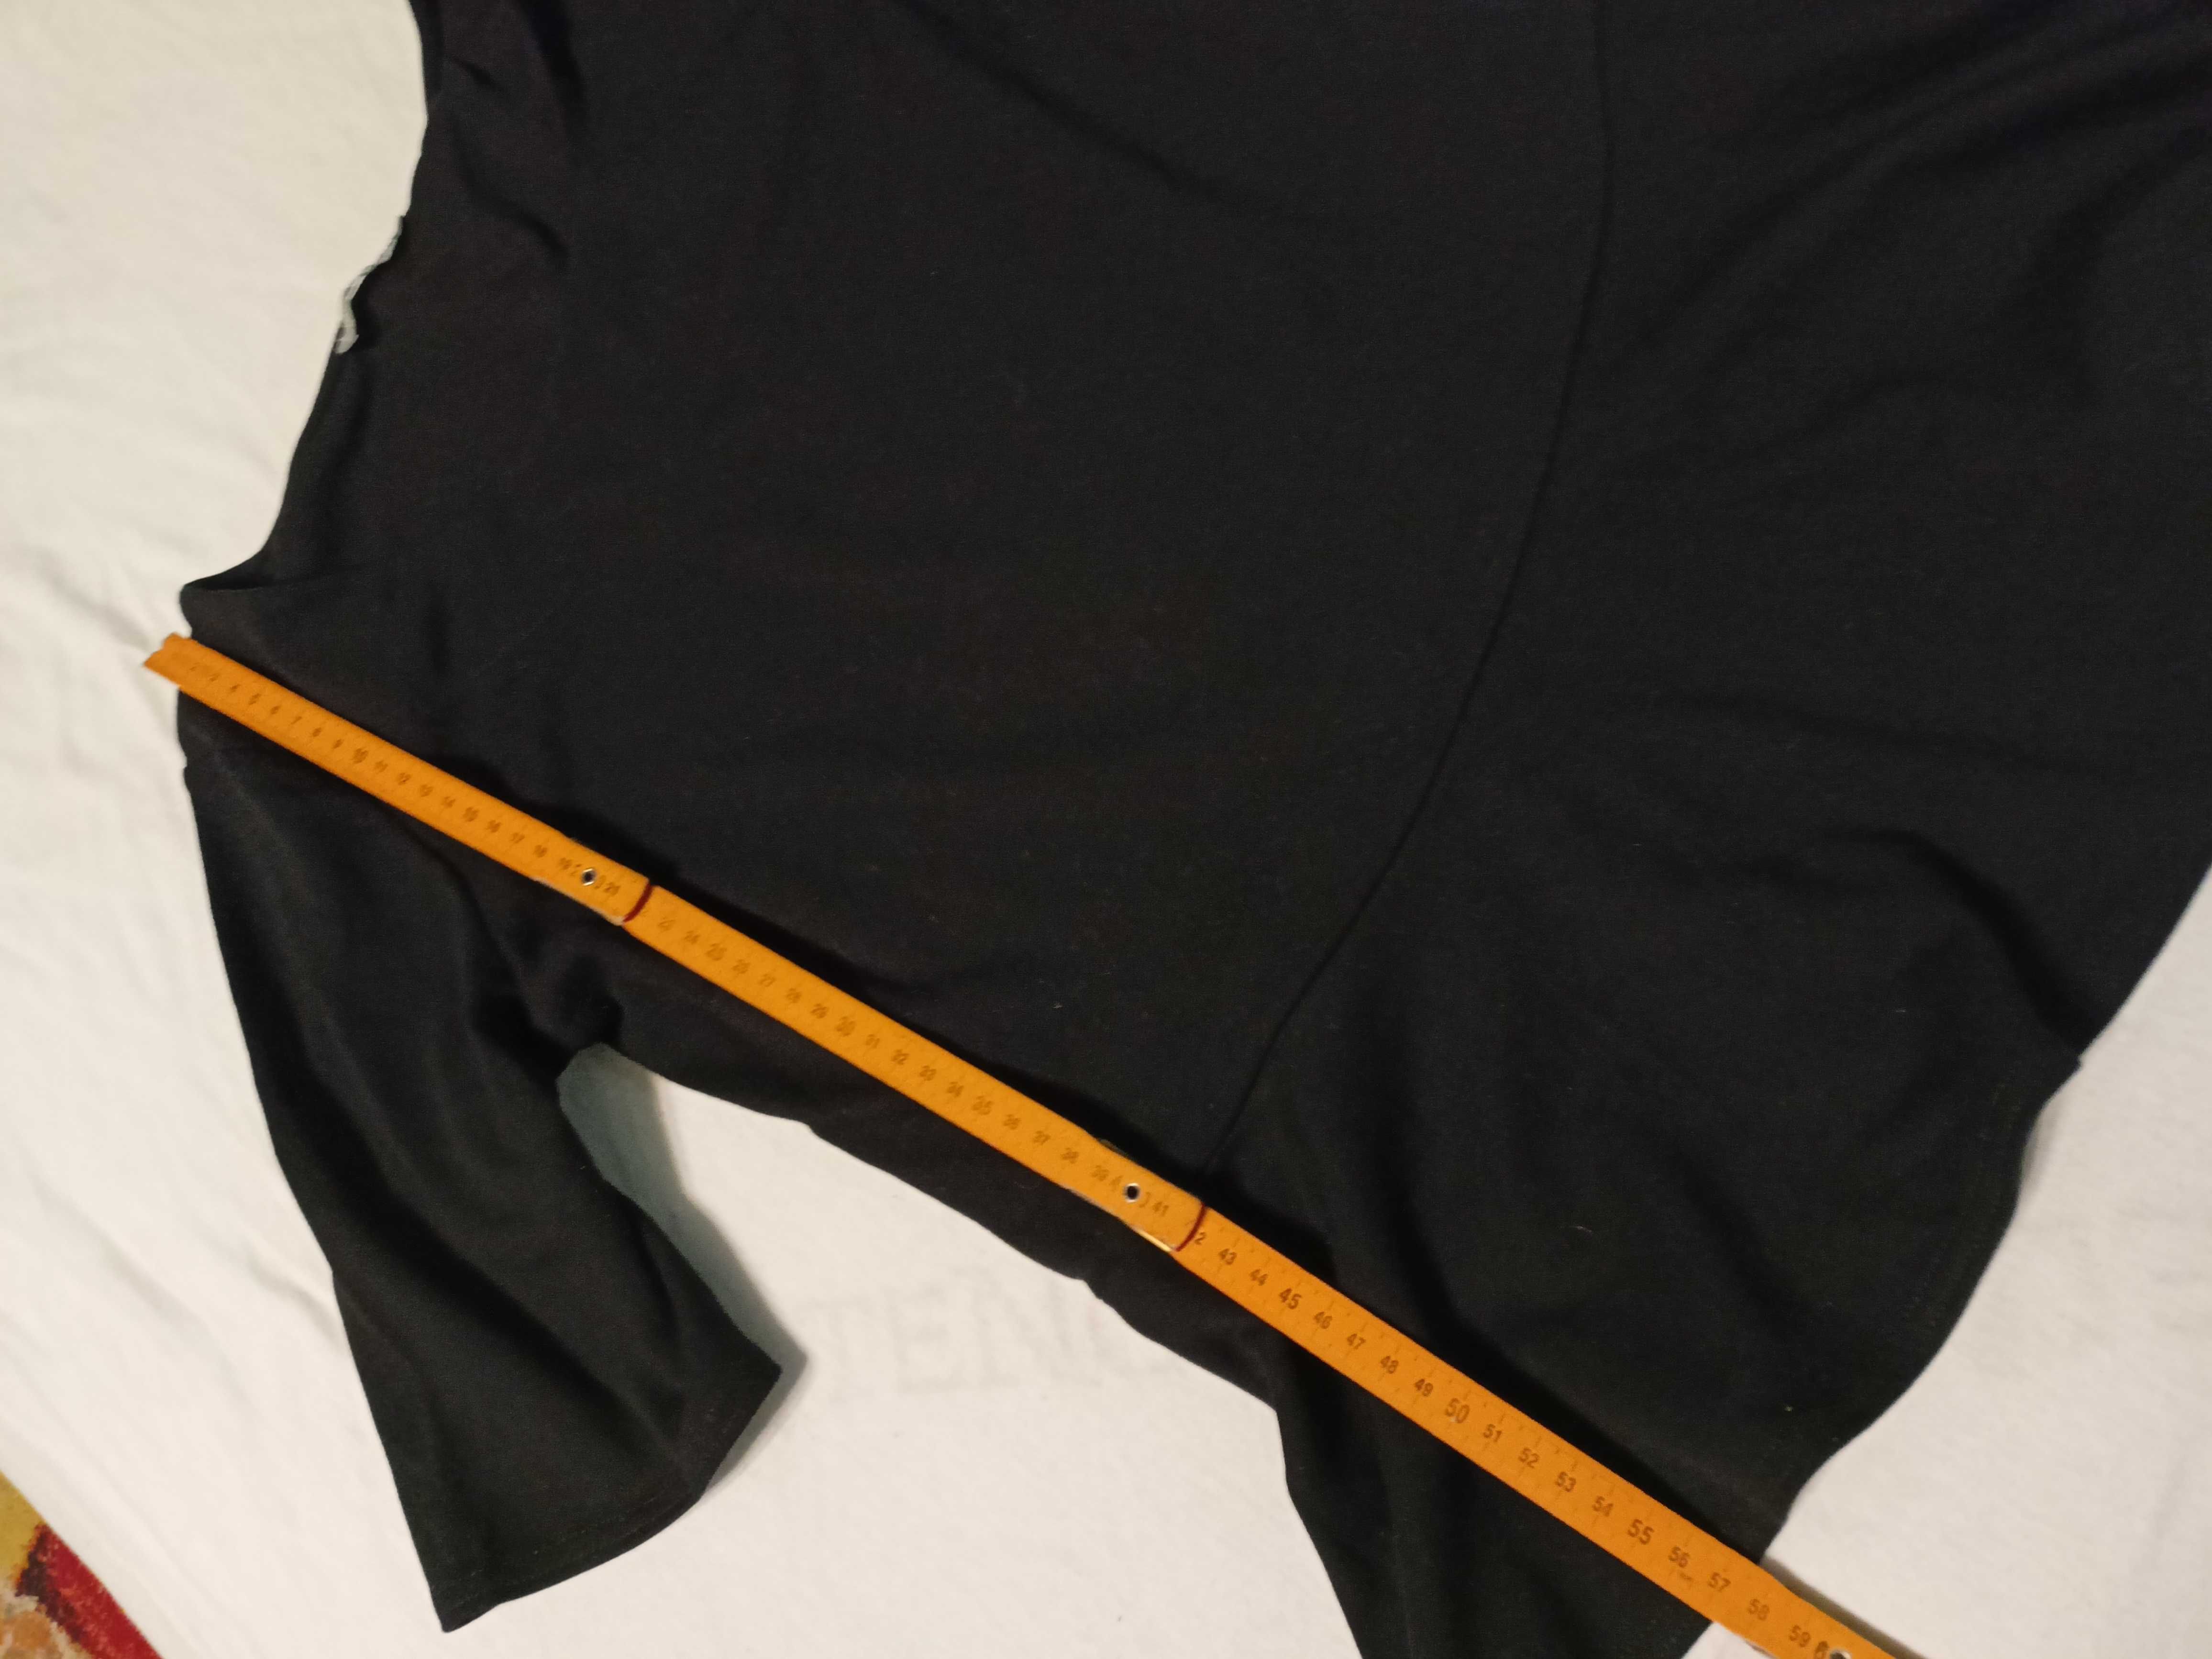 czarna bluzka elegancka baskinka 42 XL